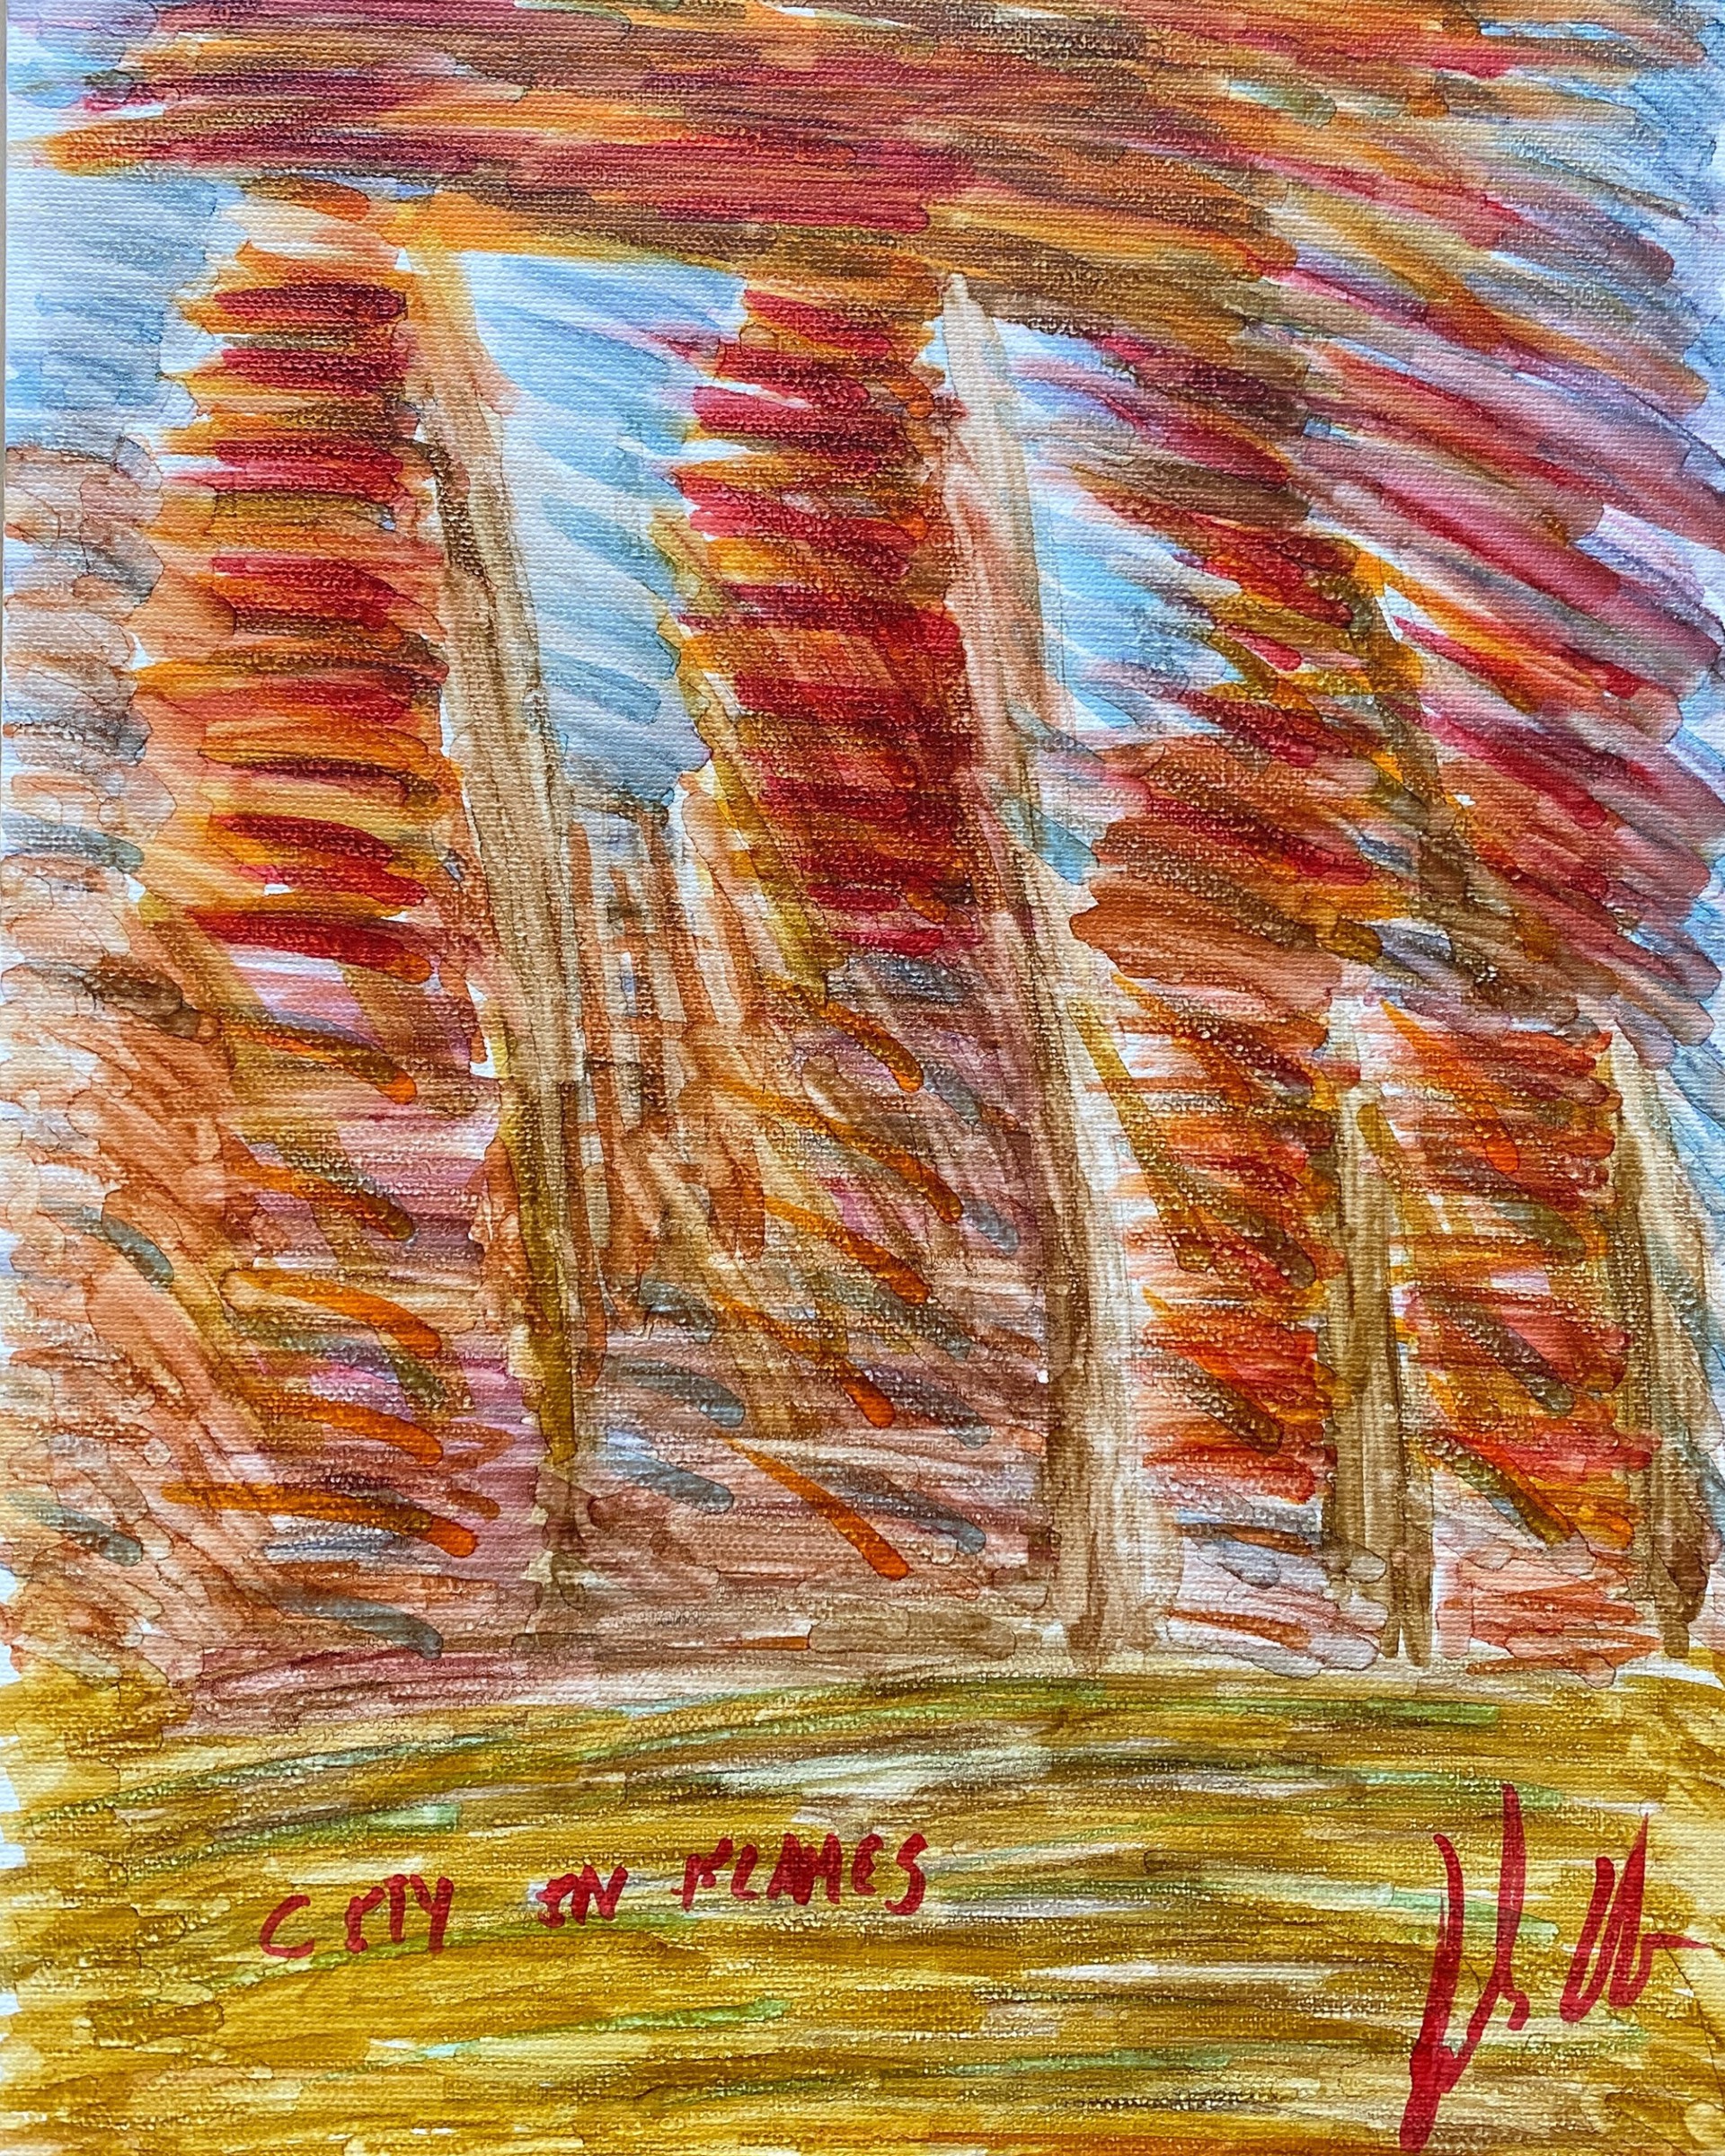 City In Flames by Judith Berman